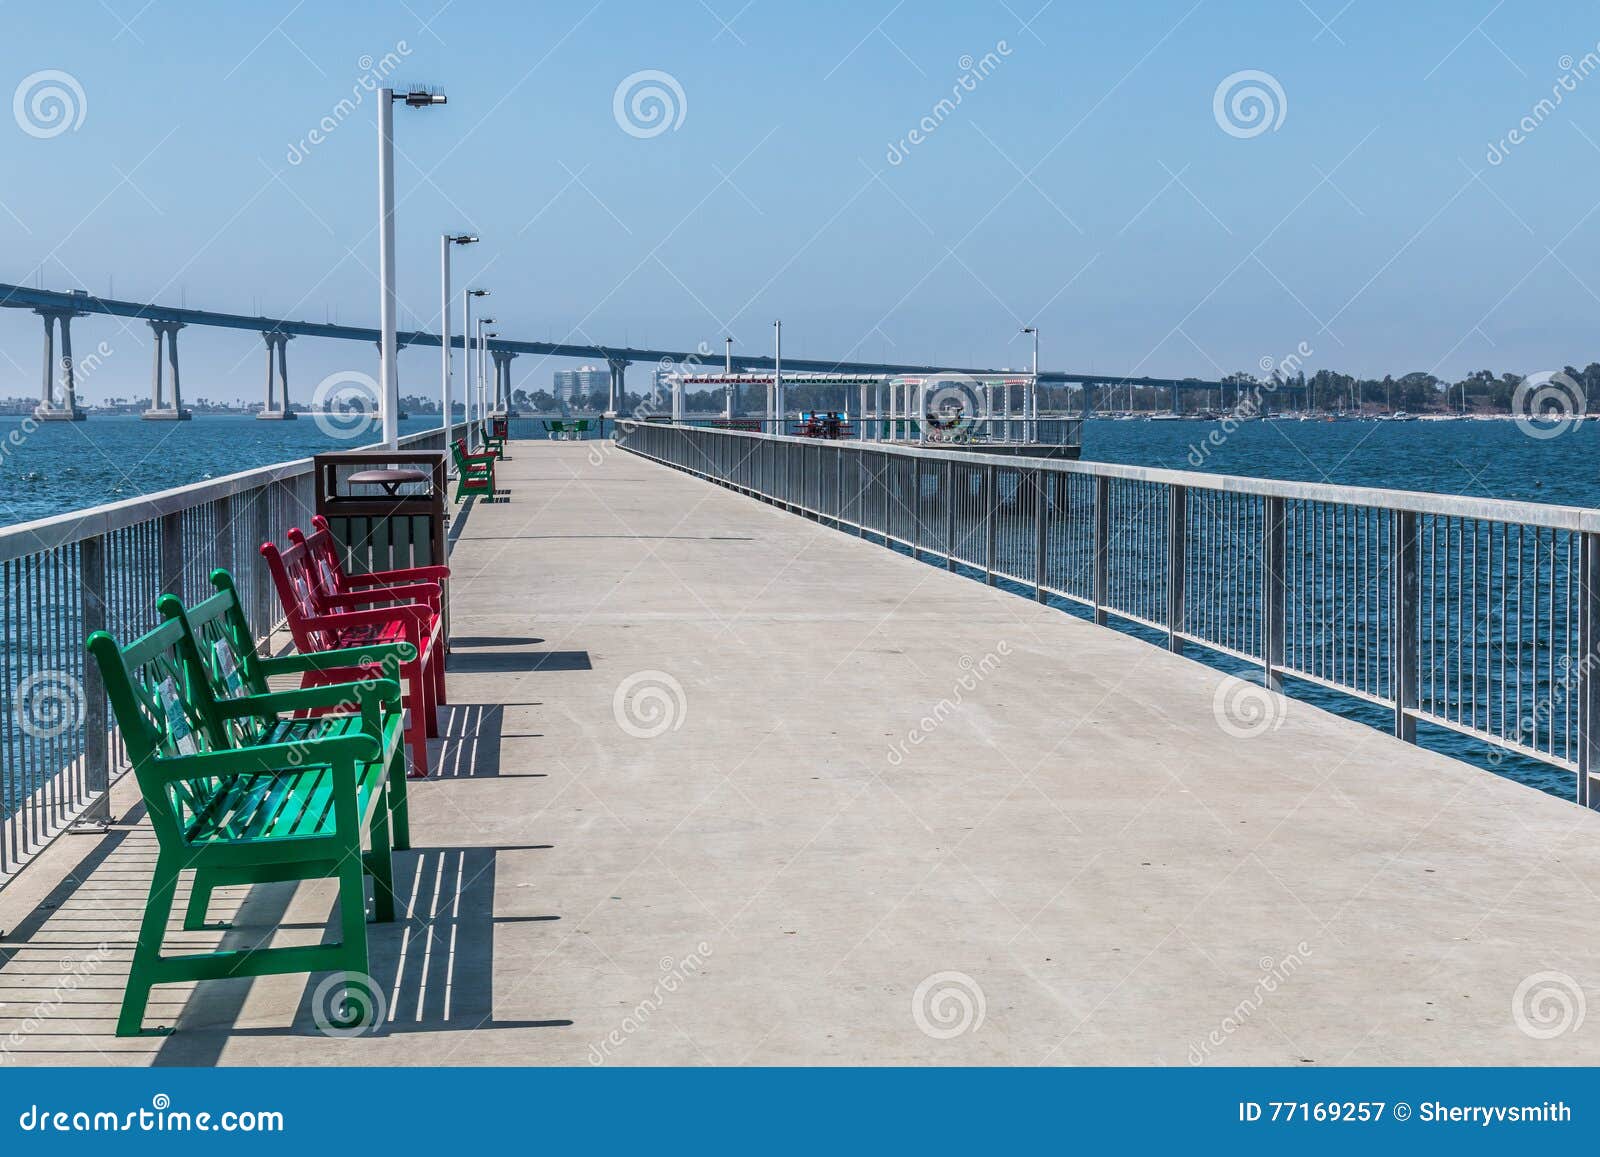 park benches on pier at cesar chavez park